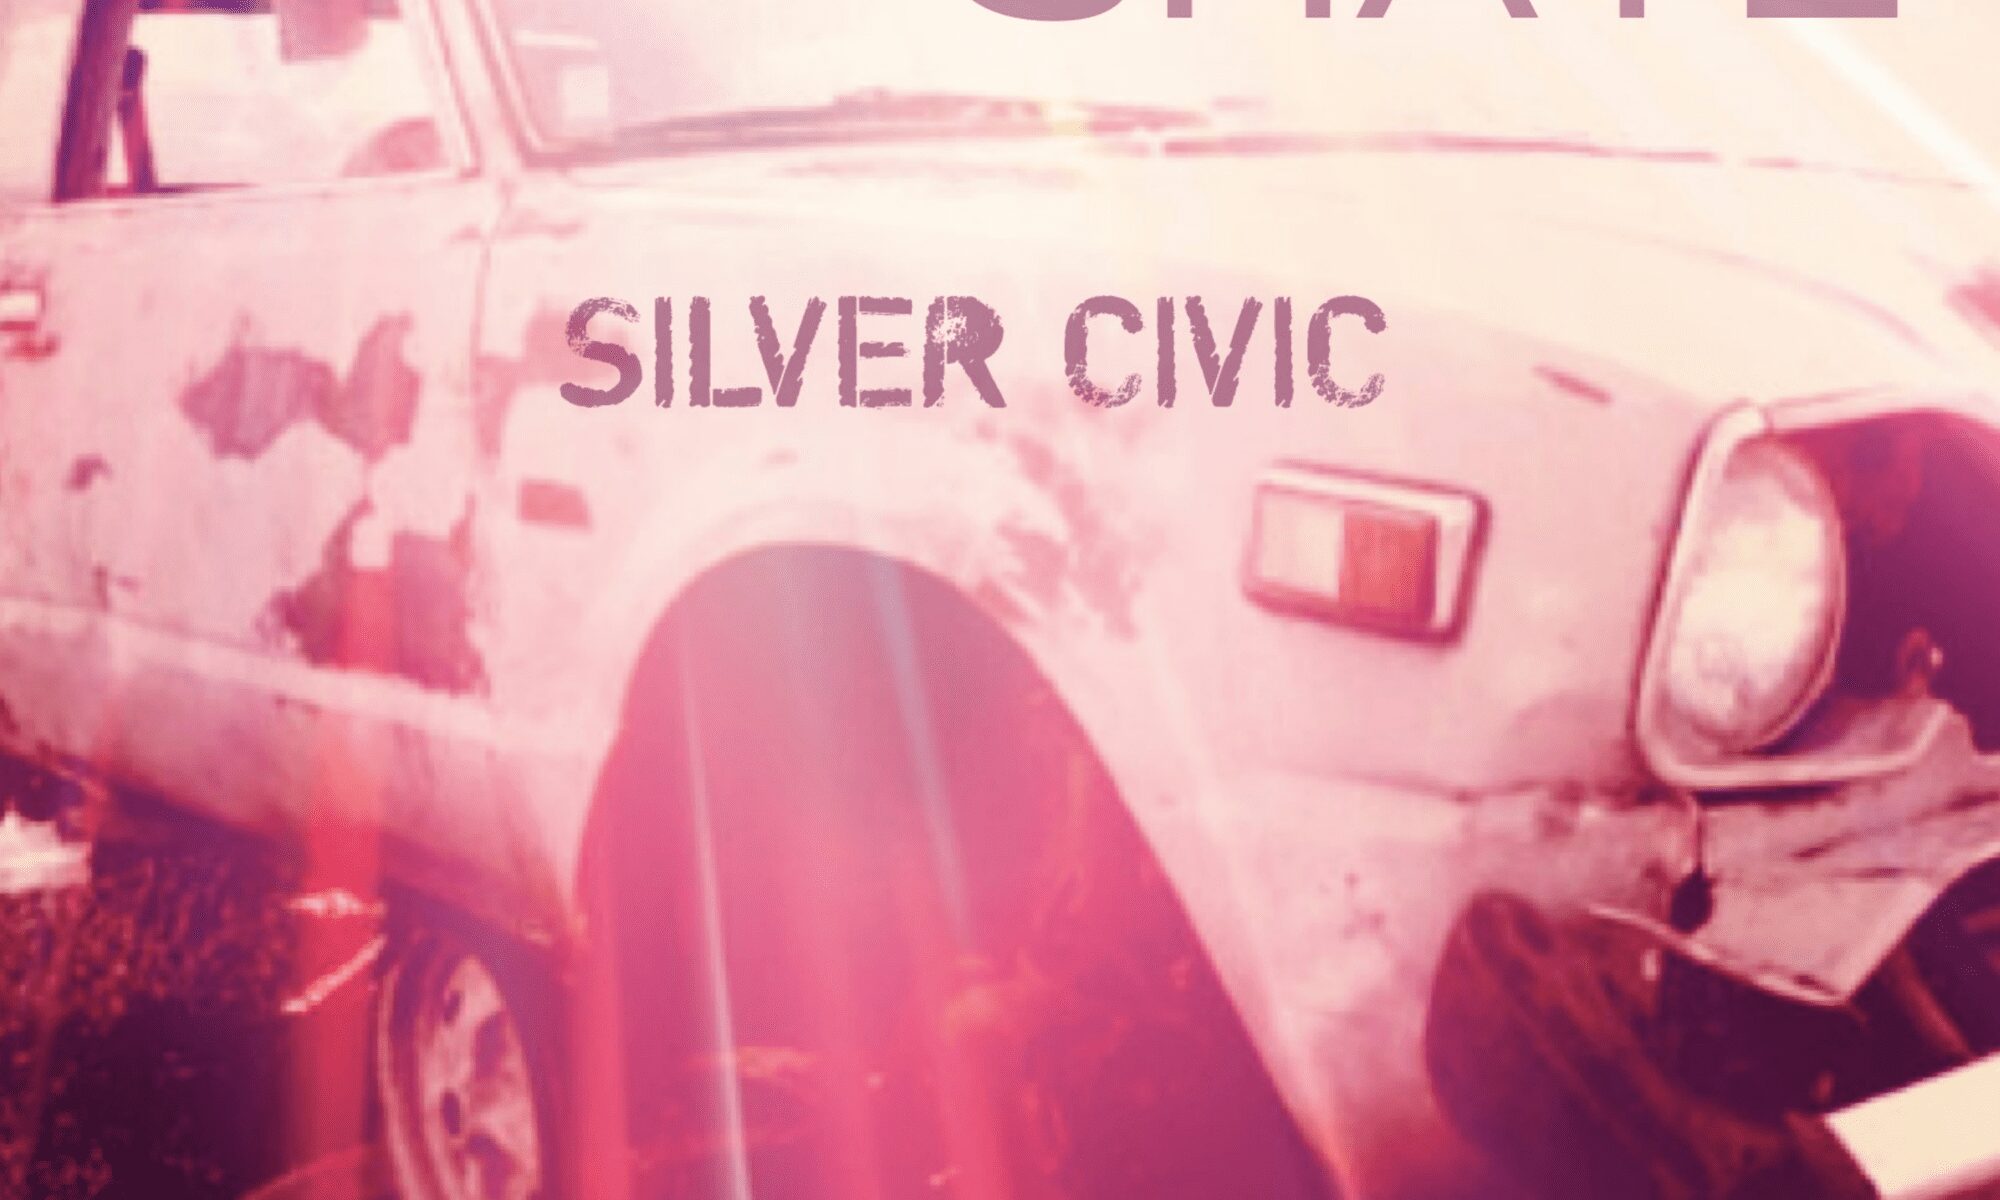 Silver Civis Shaye single cover featuring a broken down silver civic